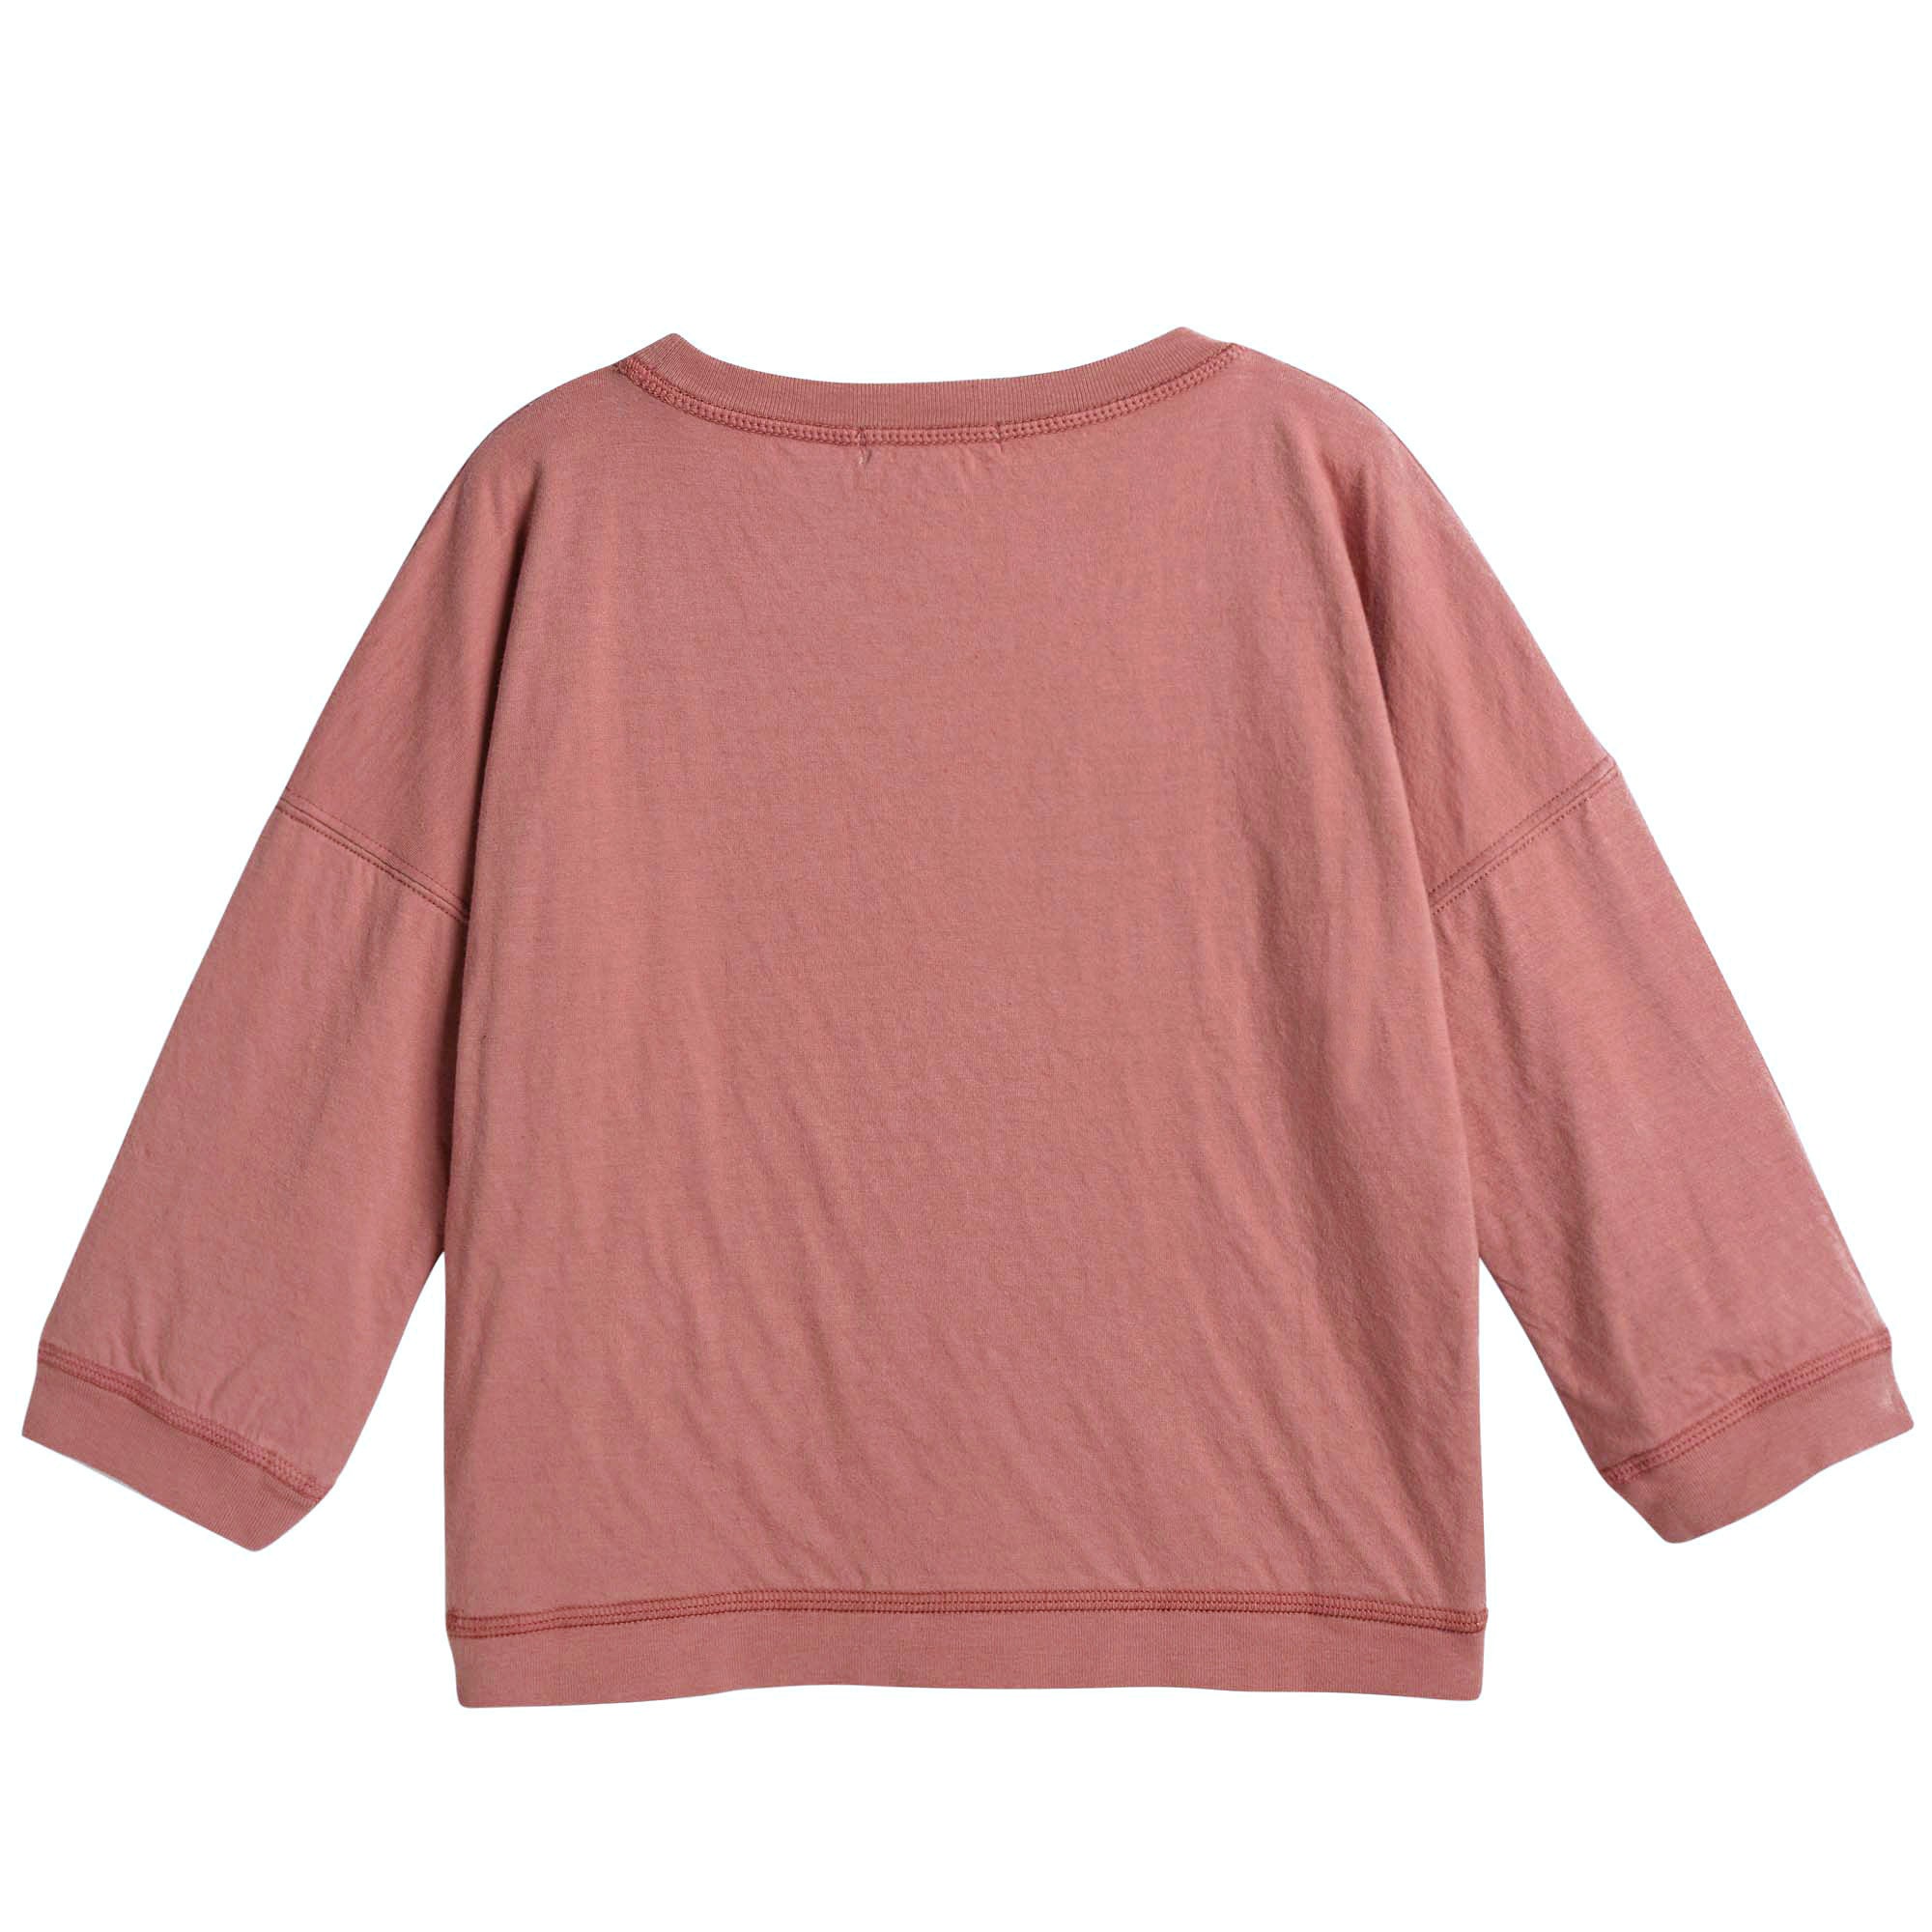 Girls Dark Red Floral Printed Trims T-Shirt - CÉMAROSE | Children's Fashion Store - 2